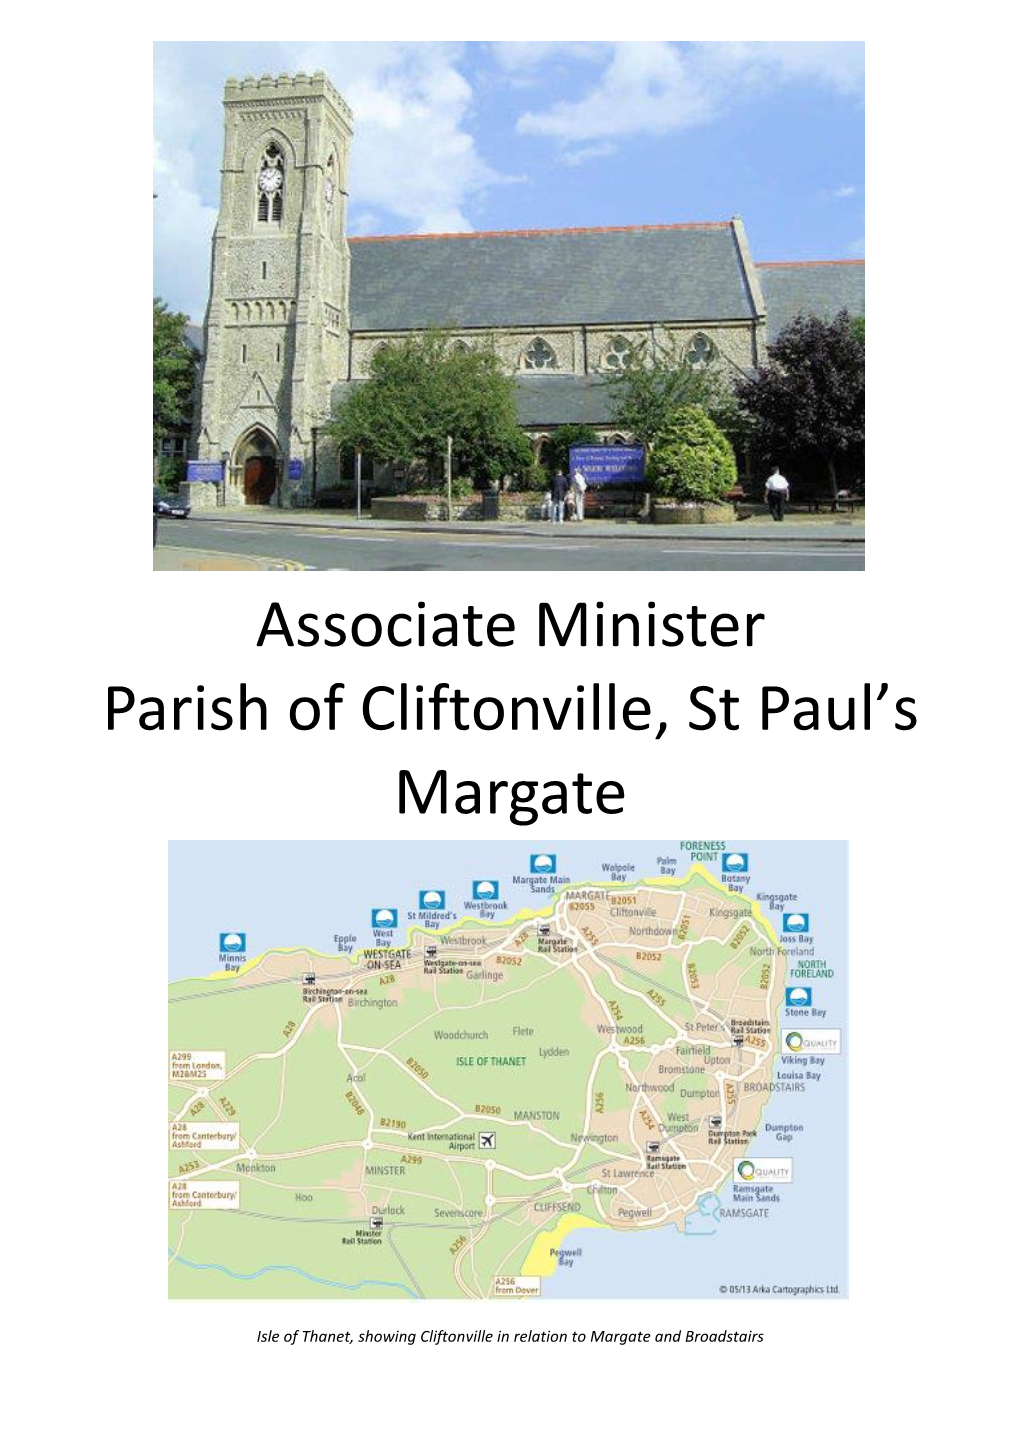 Associate Minister Parish of Cliftonville, St Paul's Margate